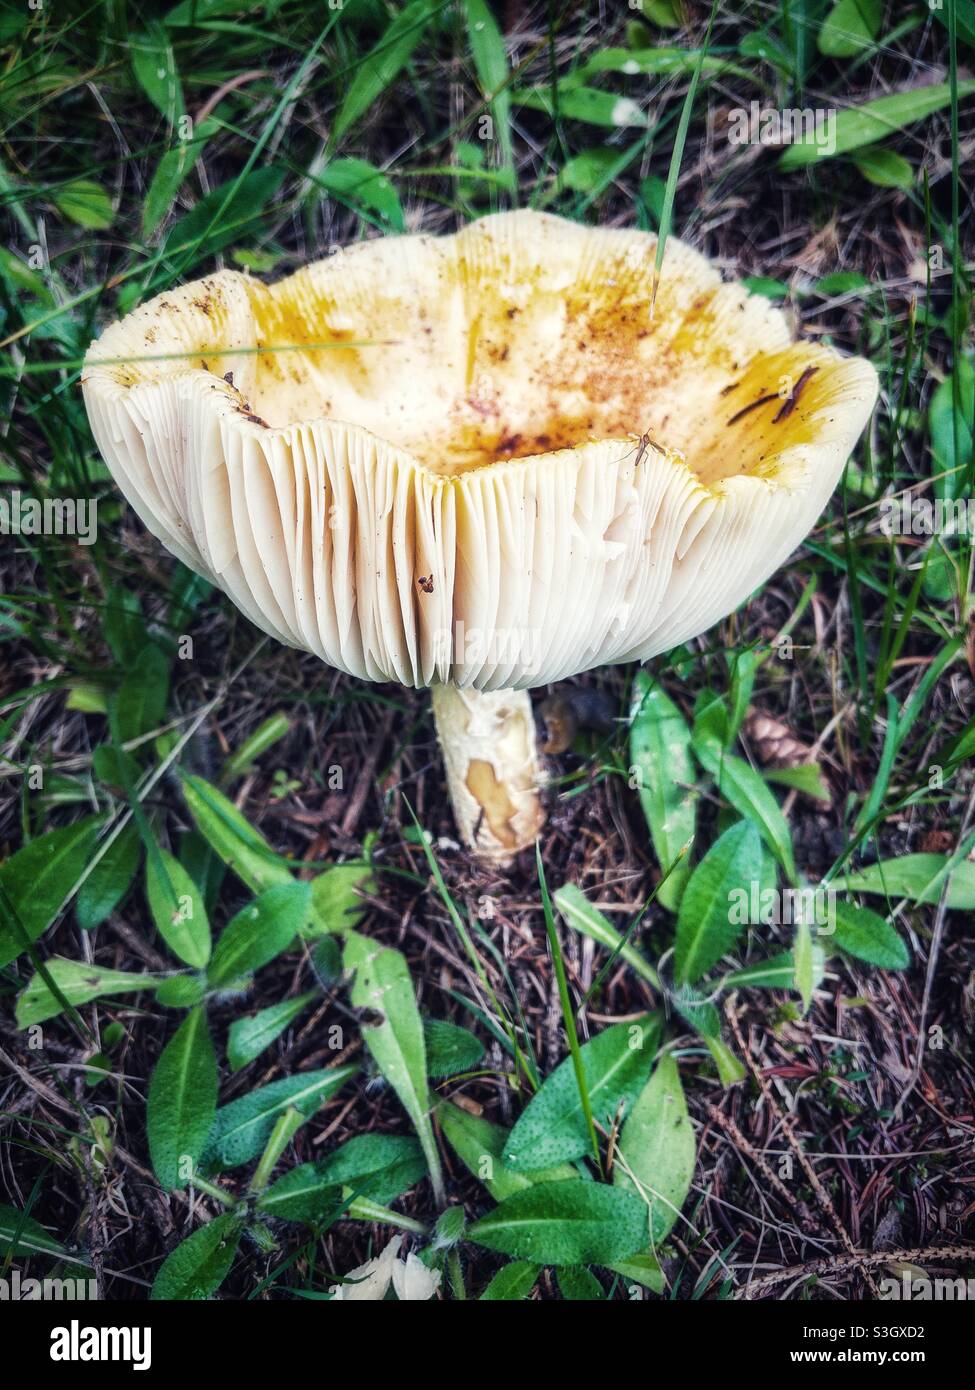 Large mushroom growing in the wild. Stock Photo